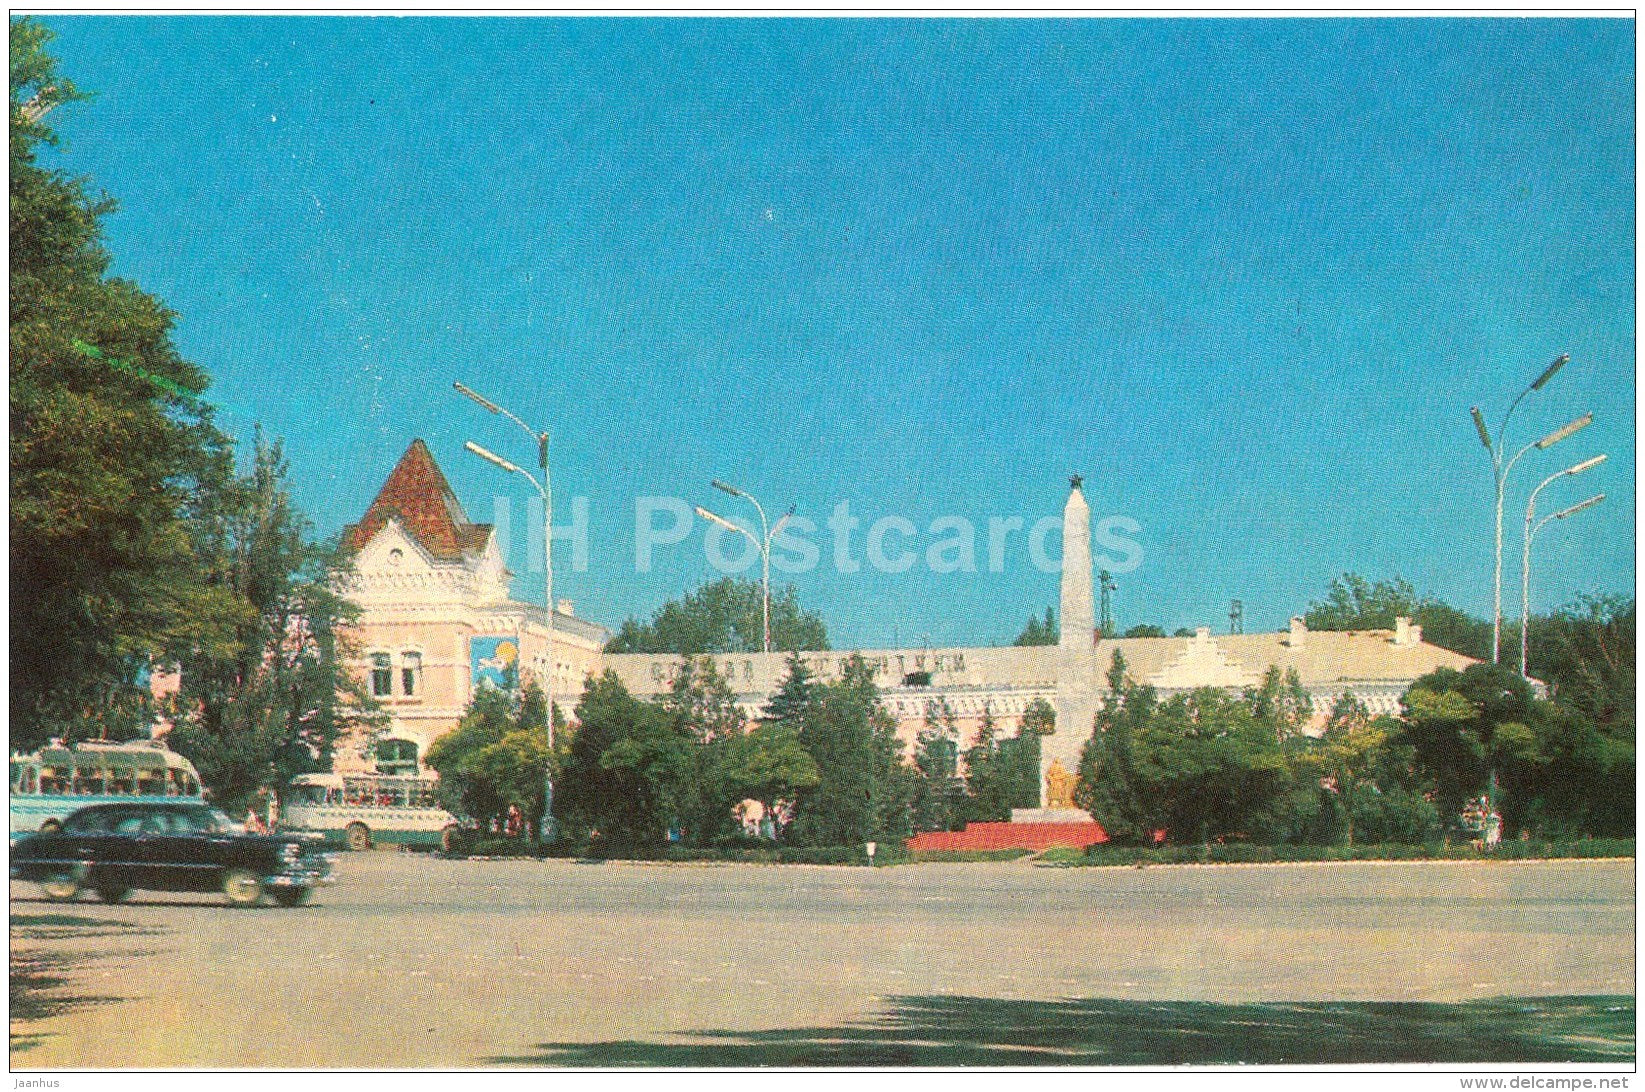 railway station square - Yessentuki - Caucasus - 1971 - Russia USSR - unused - JH Postcards